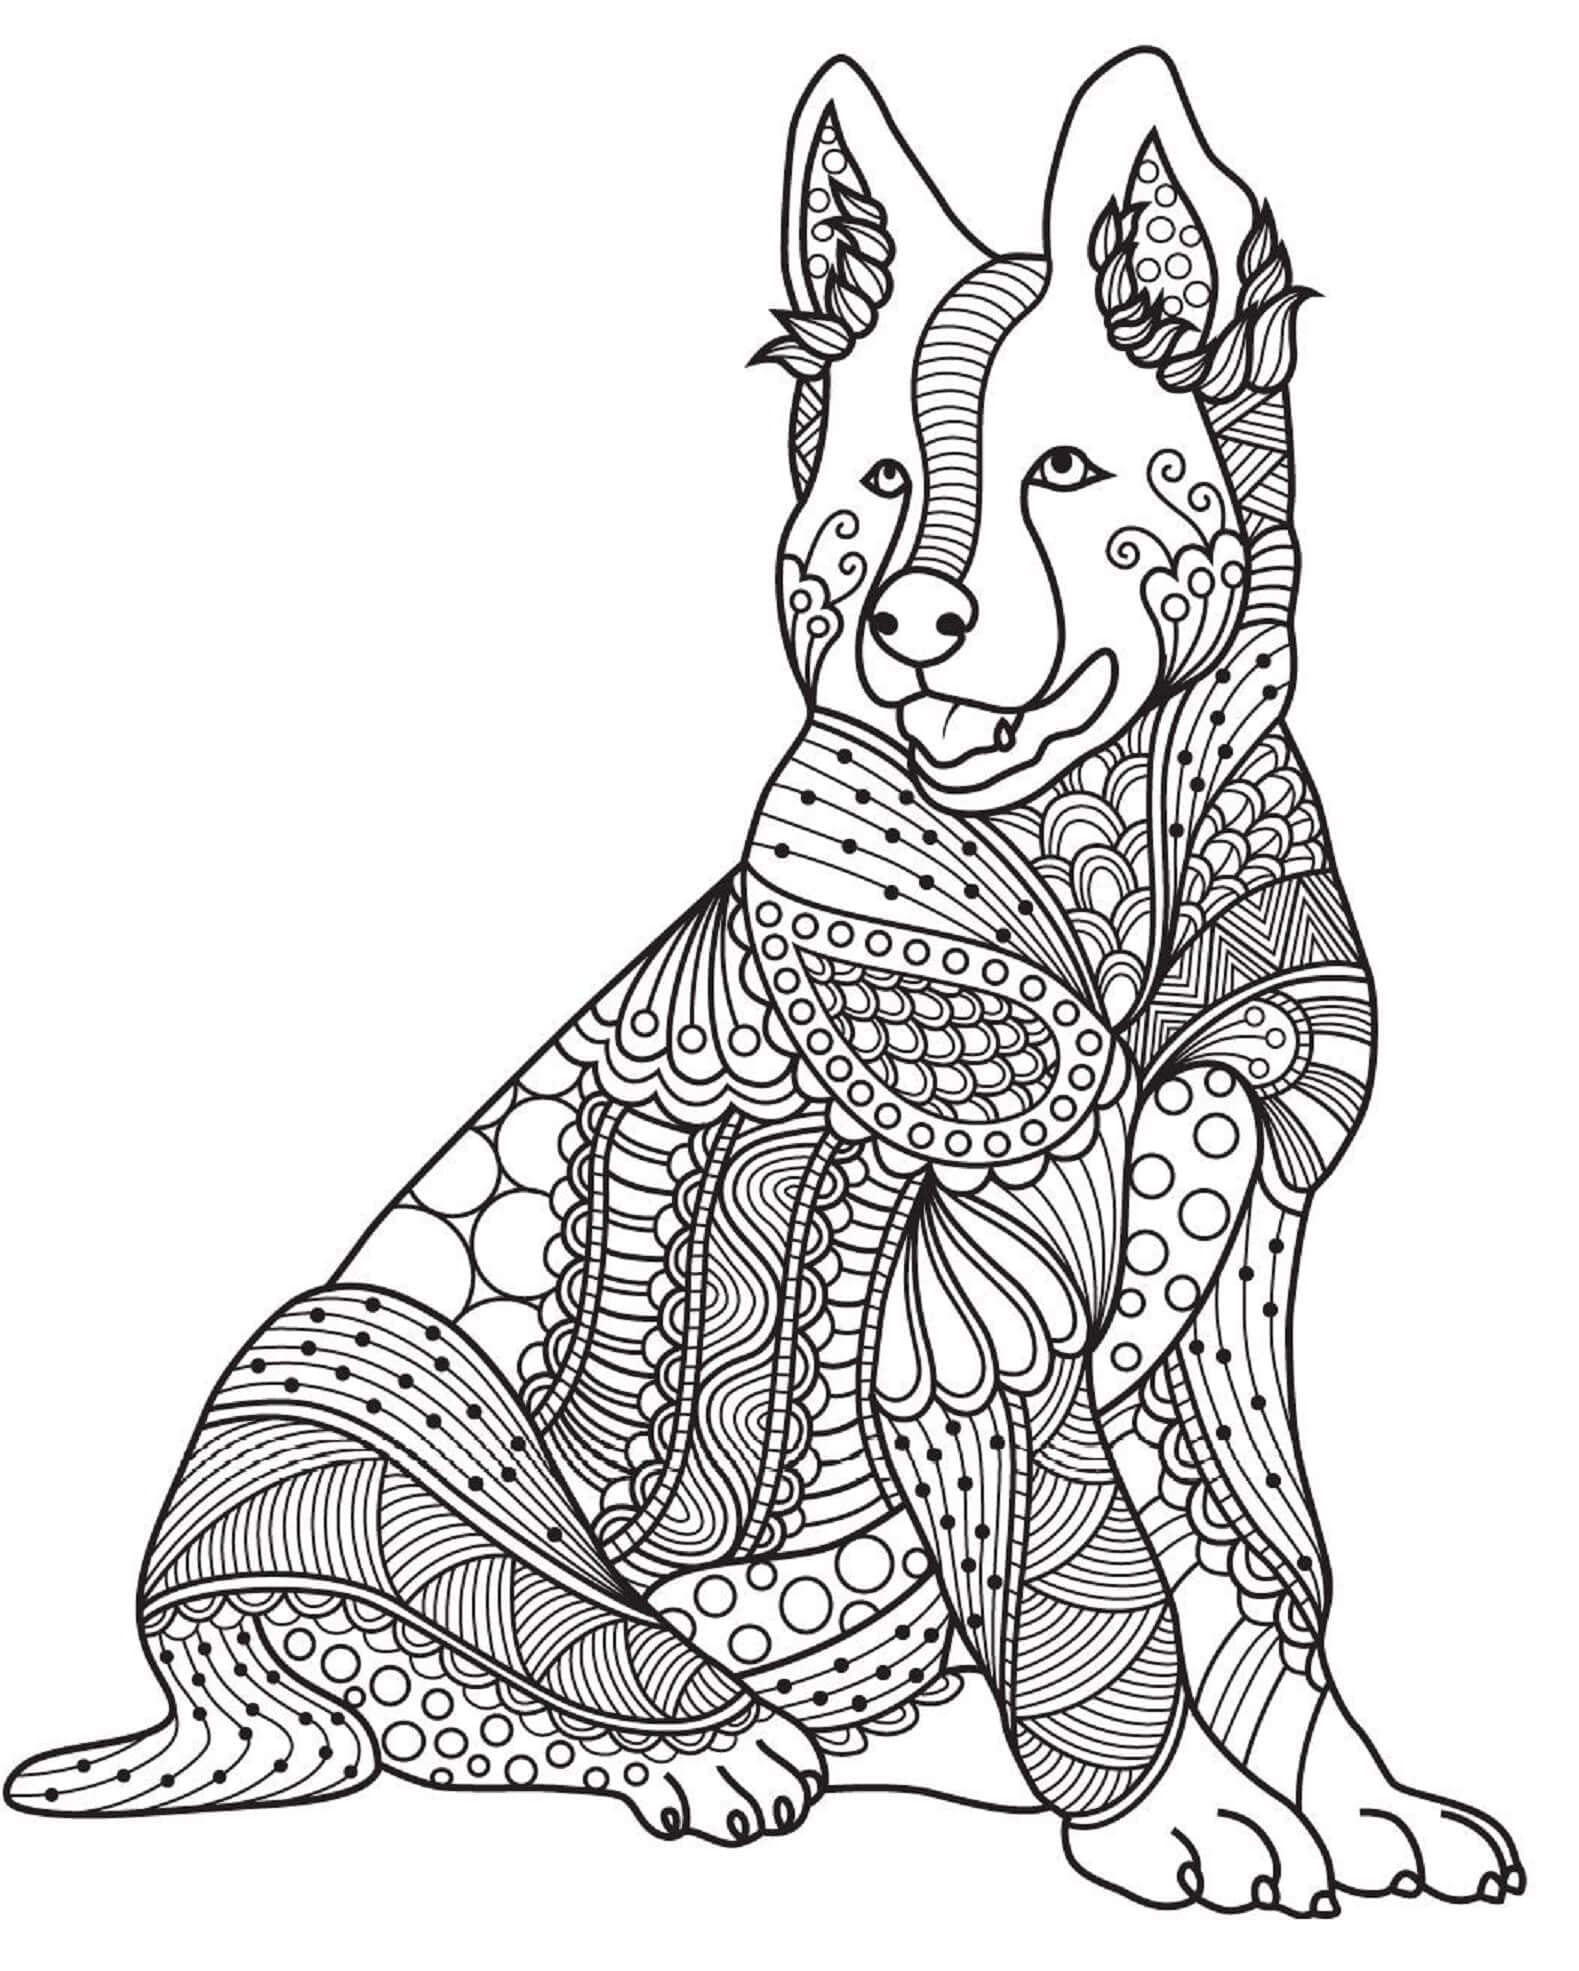 Mandala de Perro sentado para colorir